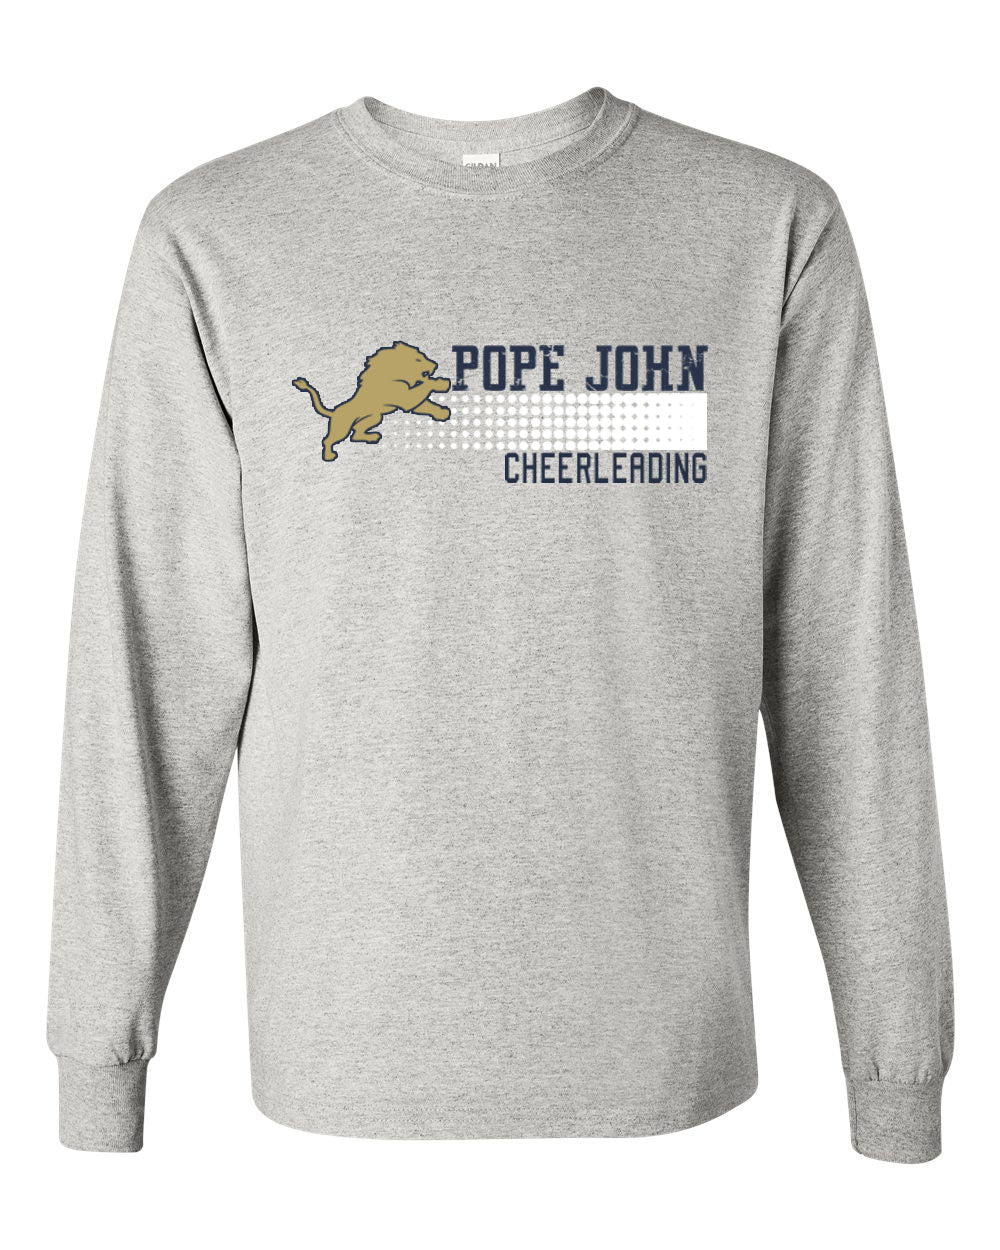 Pope John Cheer Design 4 Long Sleeve Shirt